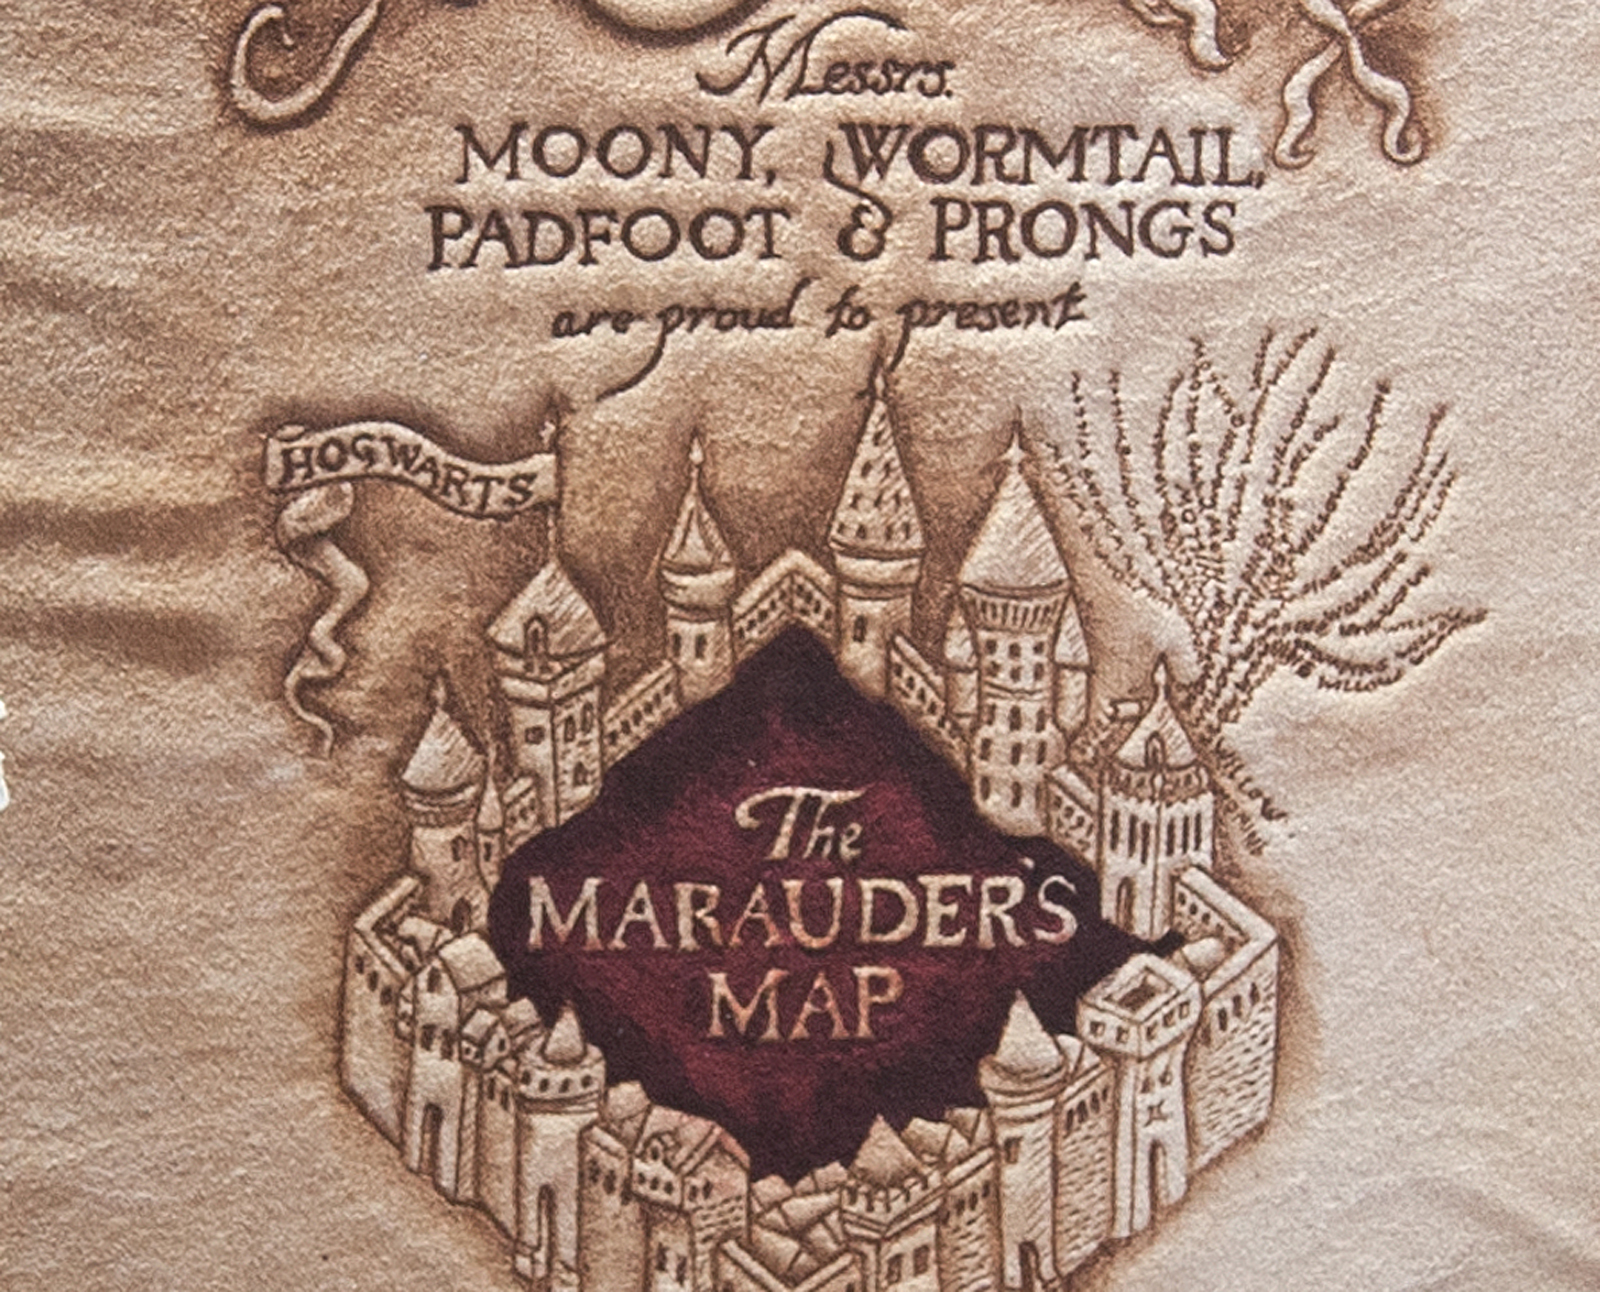 Harry Potter - Marauder's Map Reproduction - Cave Geek Art